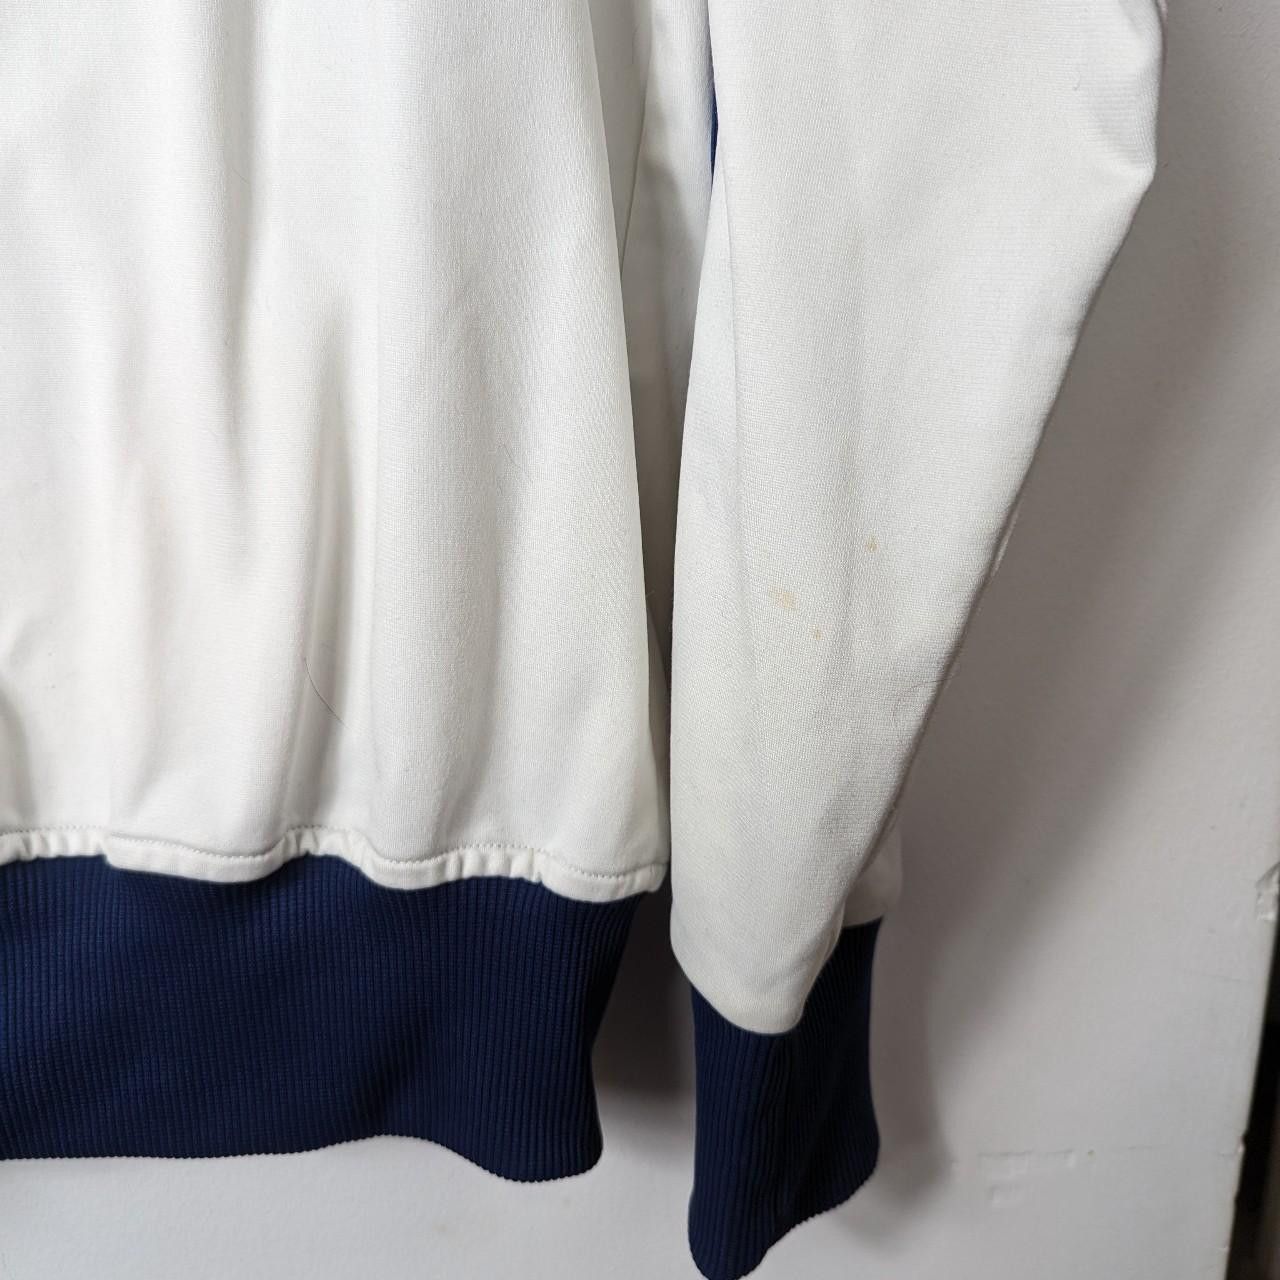 Adidas Vintage Adidas y2k Track top Track suit Sweatshirt Size US M / EU 48-50 / 2 - 7 Preview